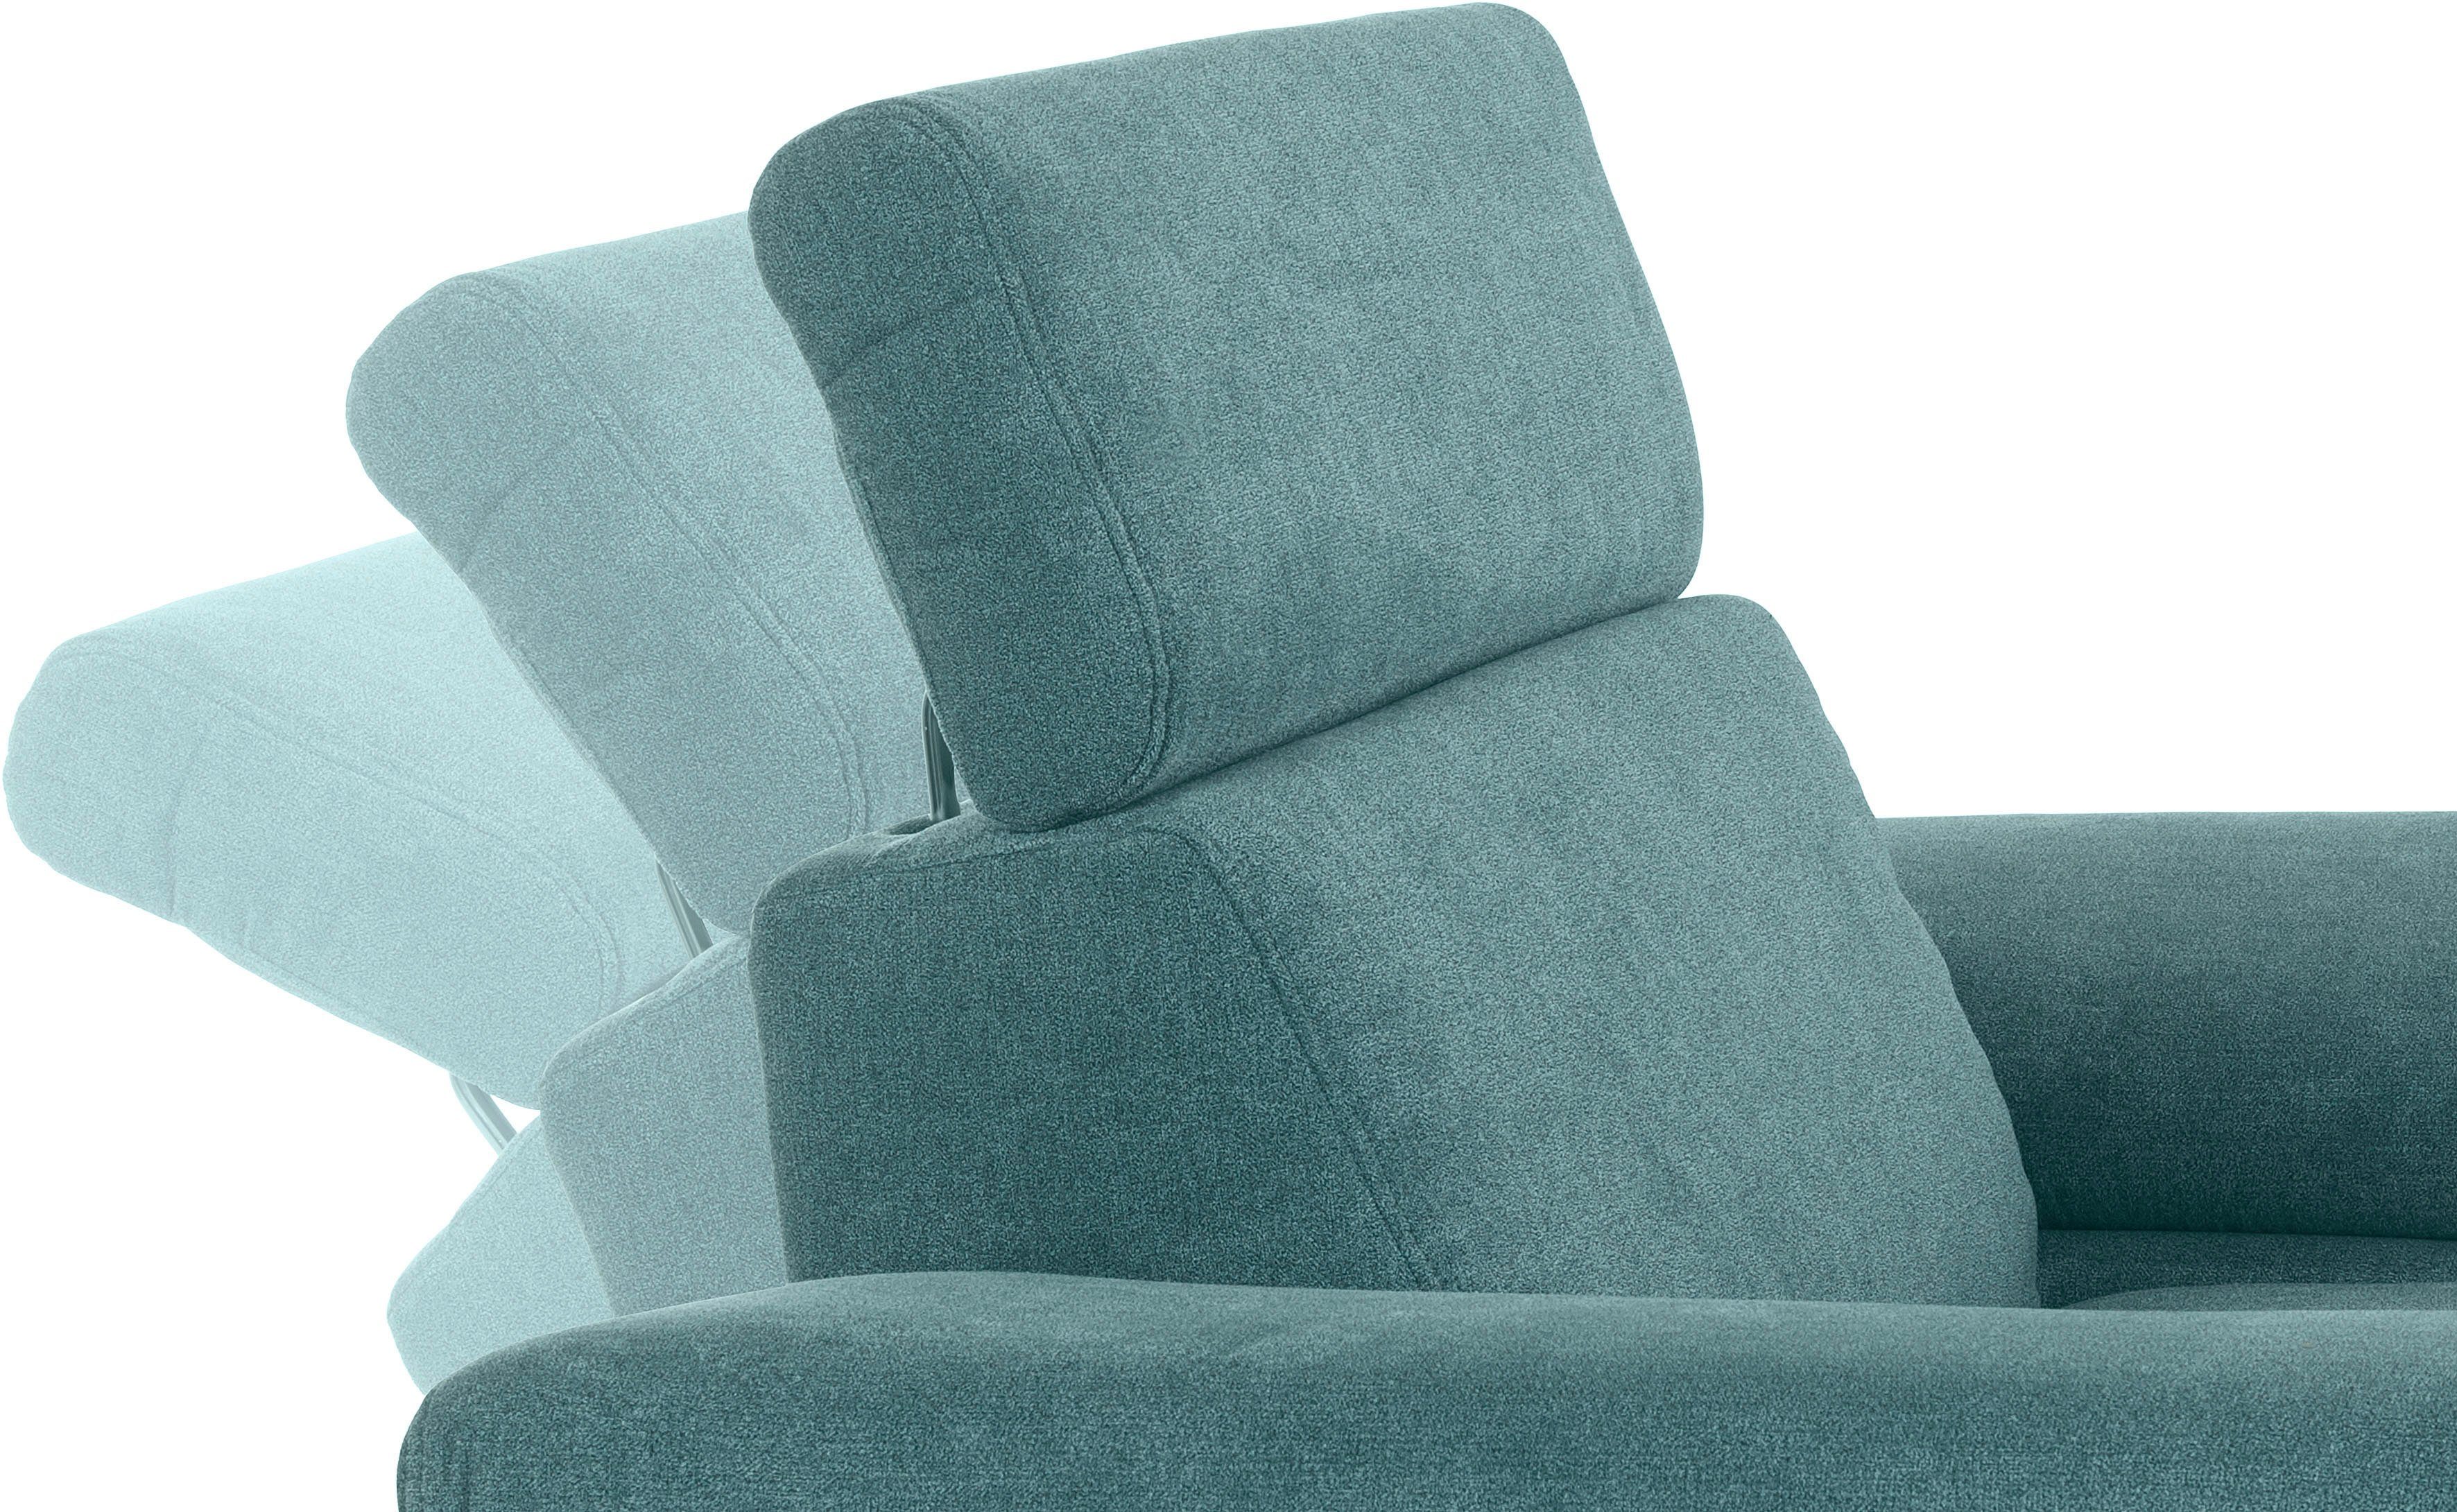 Rückenverstellung, Places Lederoptik of mit Sessel in Luxus, Luxus-Microfaser Style Trapino wahlweise